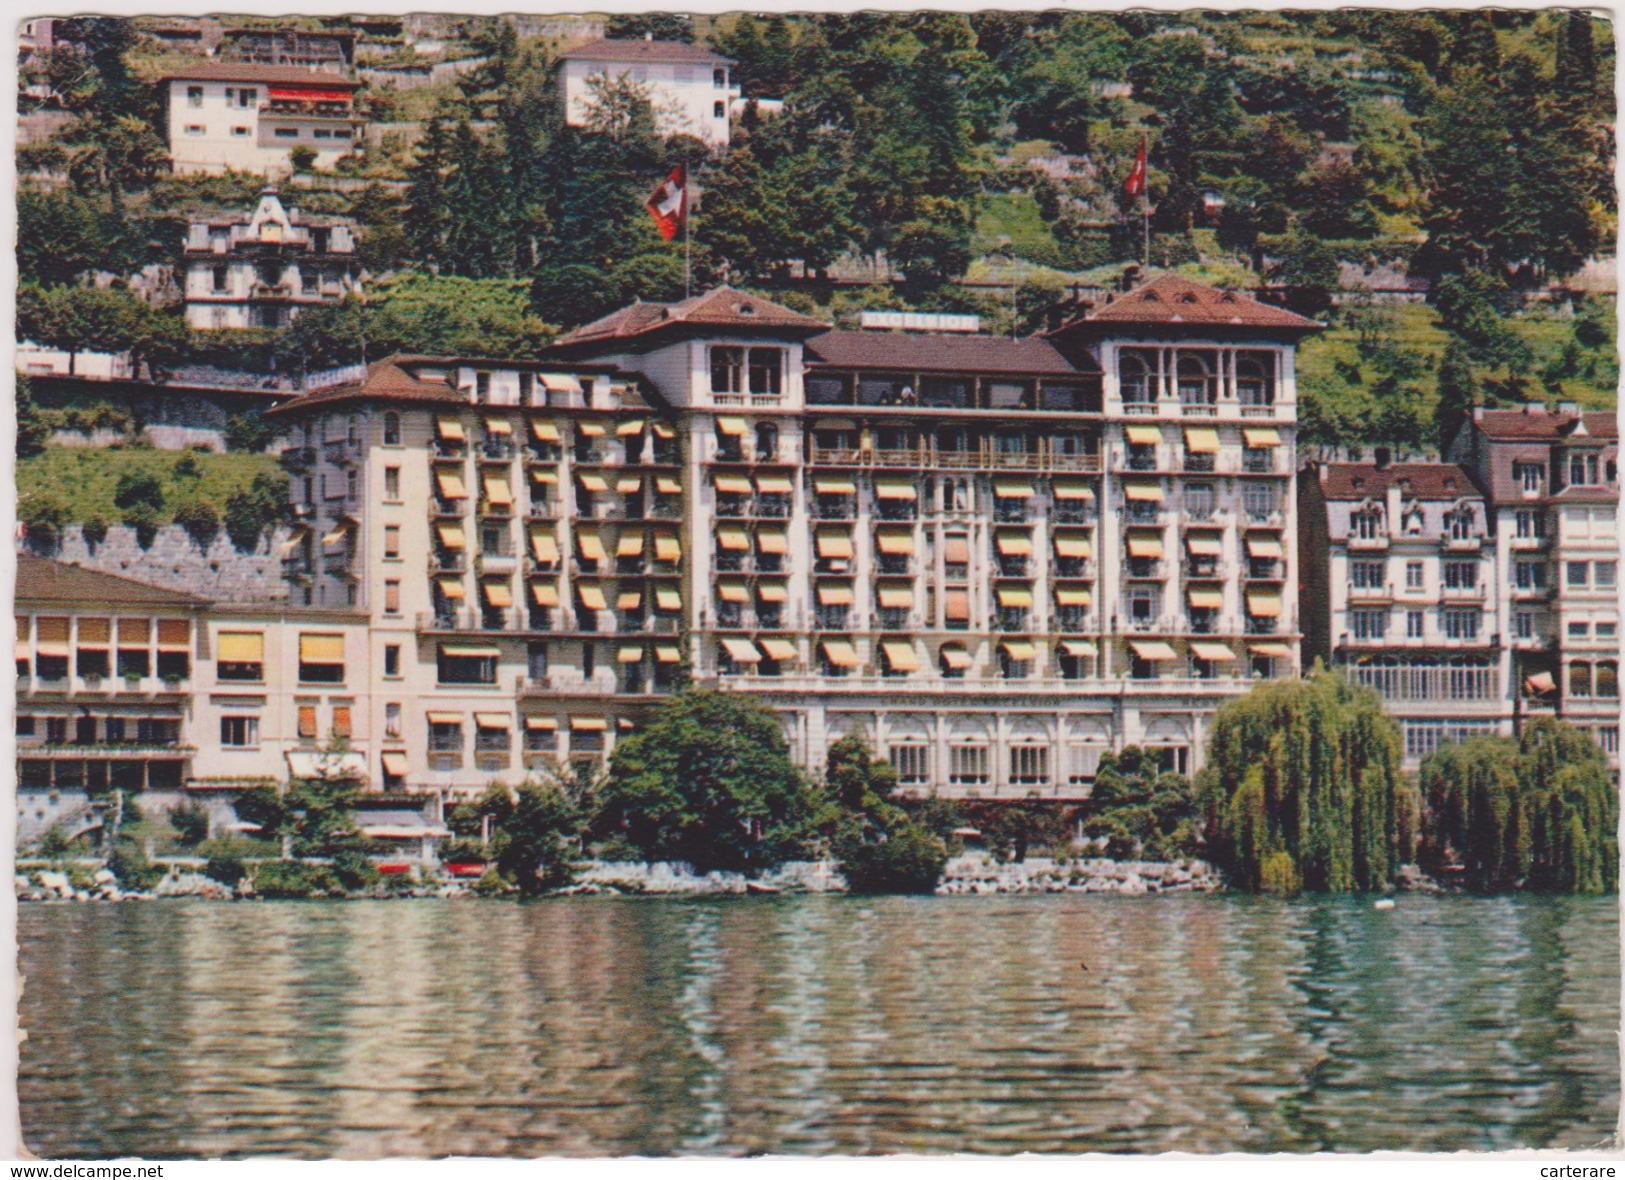 SUISSE,HELVETIA,SWISS,SCHWEIZ,SVIZZERA,SWITZERLAND ,MONTREUX,VAUD,LAC,HOTEL,EXCELSIOR,1966 - Montreux